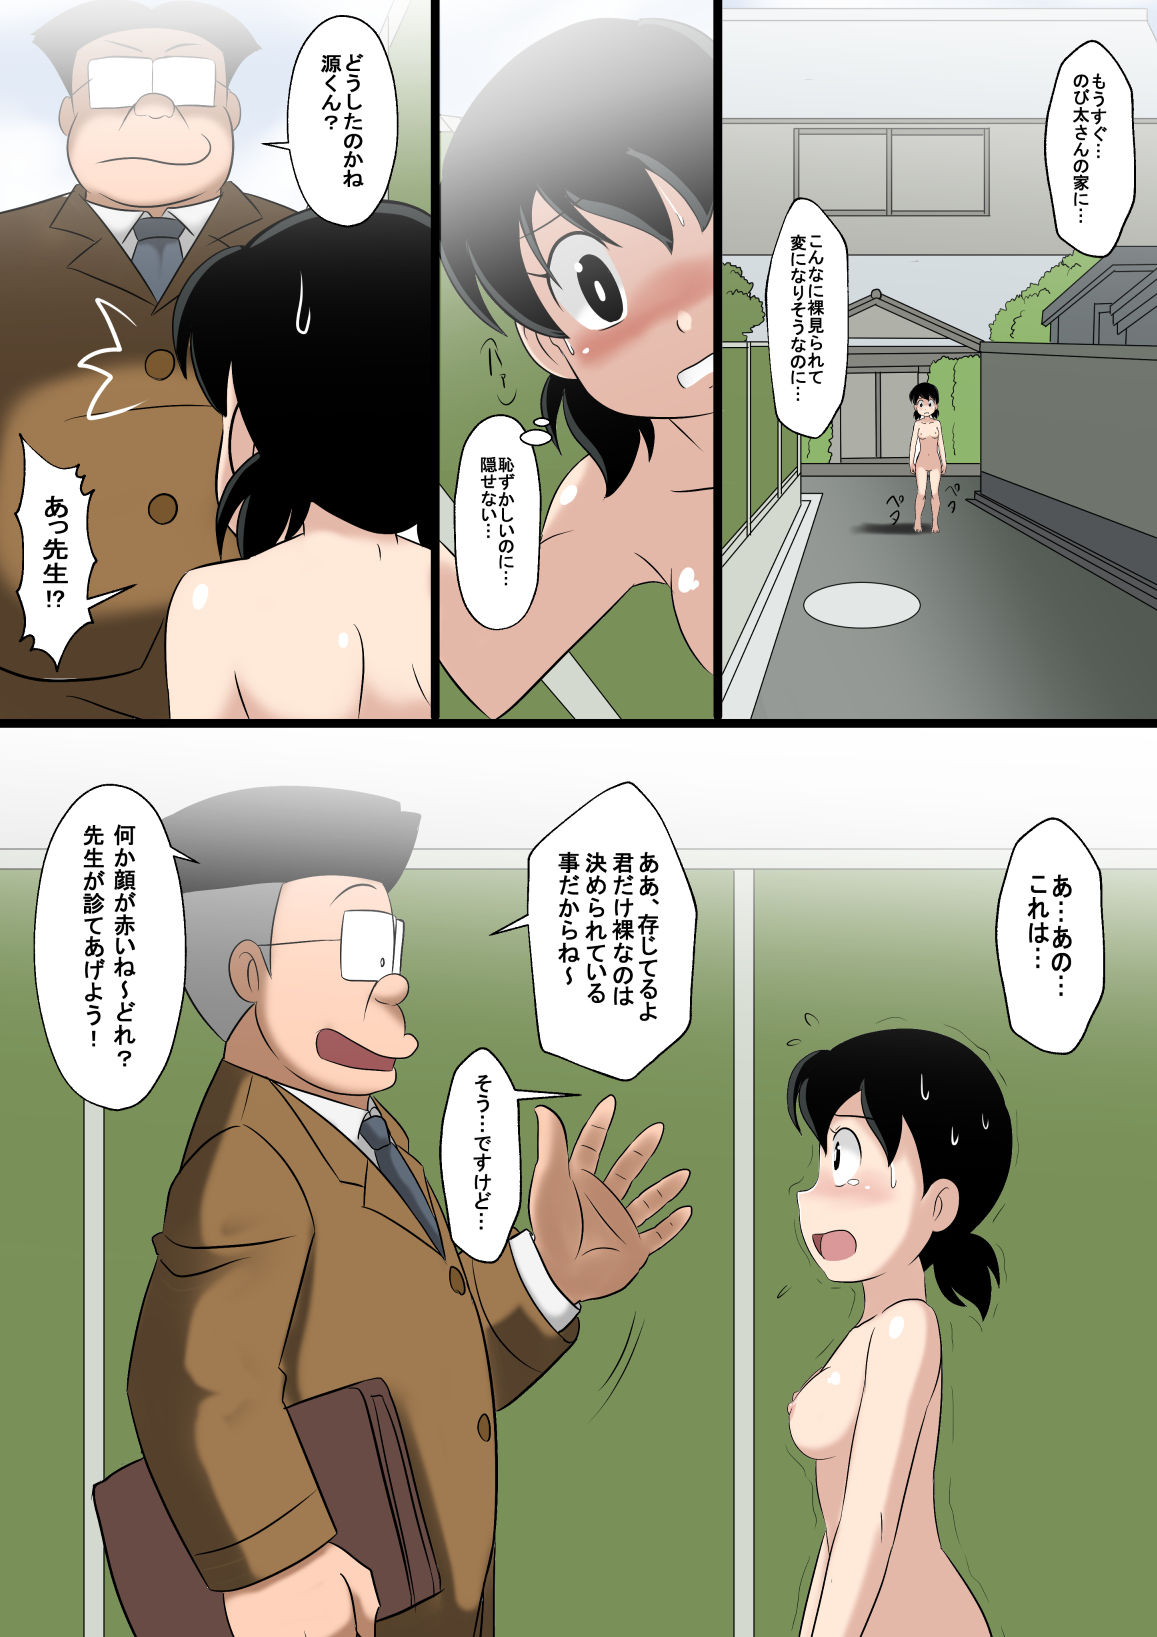 if -sizuka- - Page 10 - IMHentai